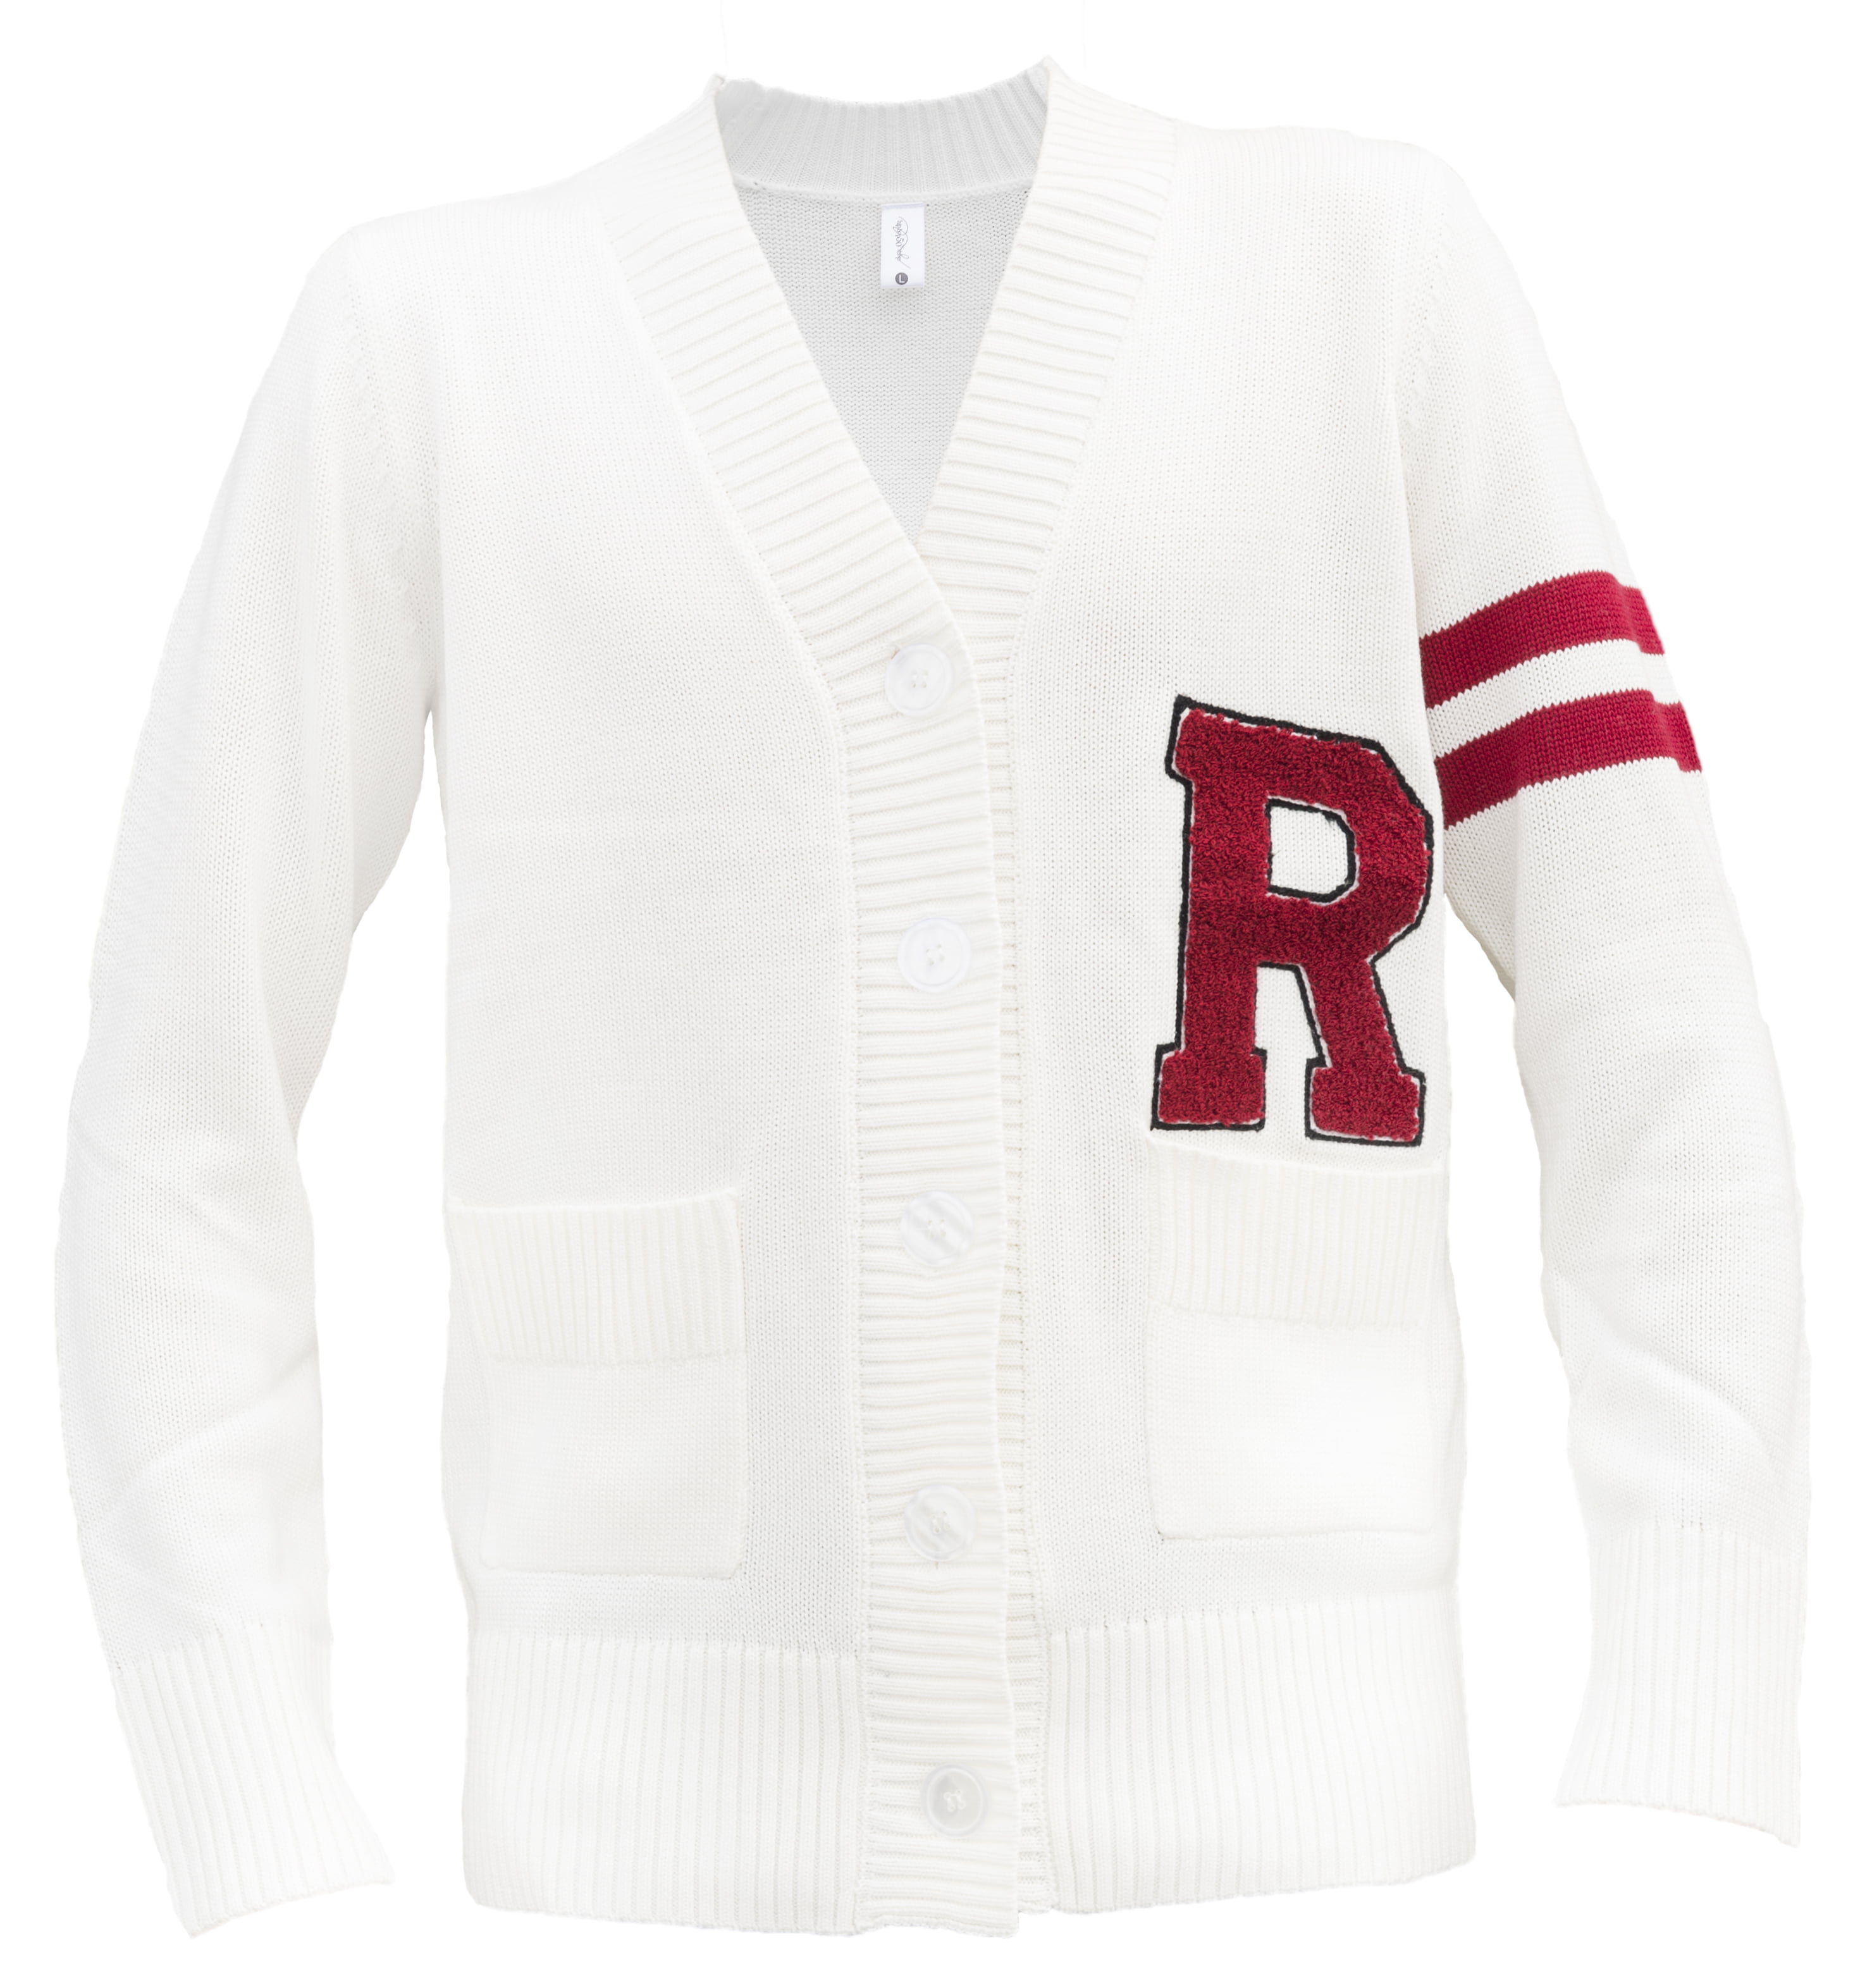 Mens 1950s Retro V Neck Button Down Long Sleeve Letterman Cardigan Sweater  - 3XL / White R